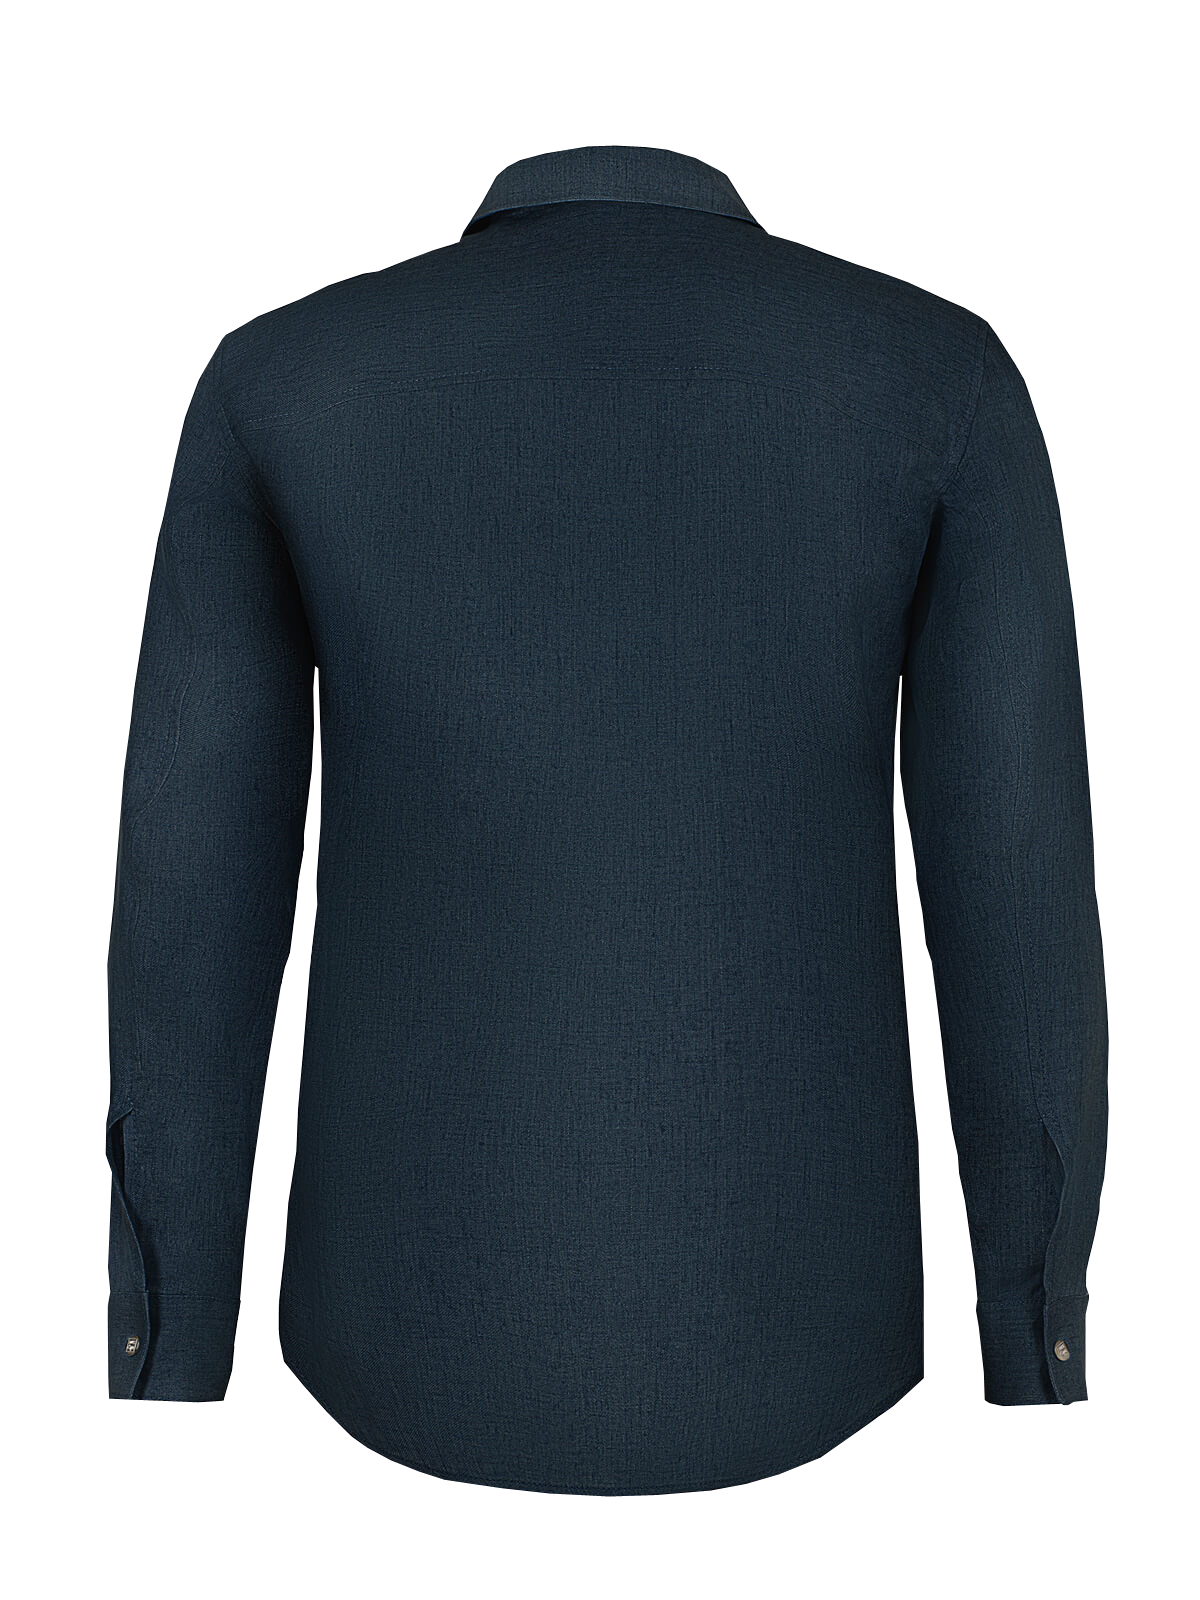 Camicia Zip Malta 100% Capri for man linen blue shirt back